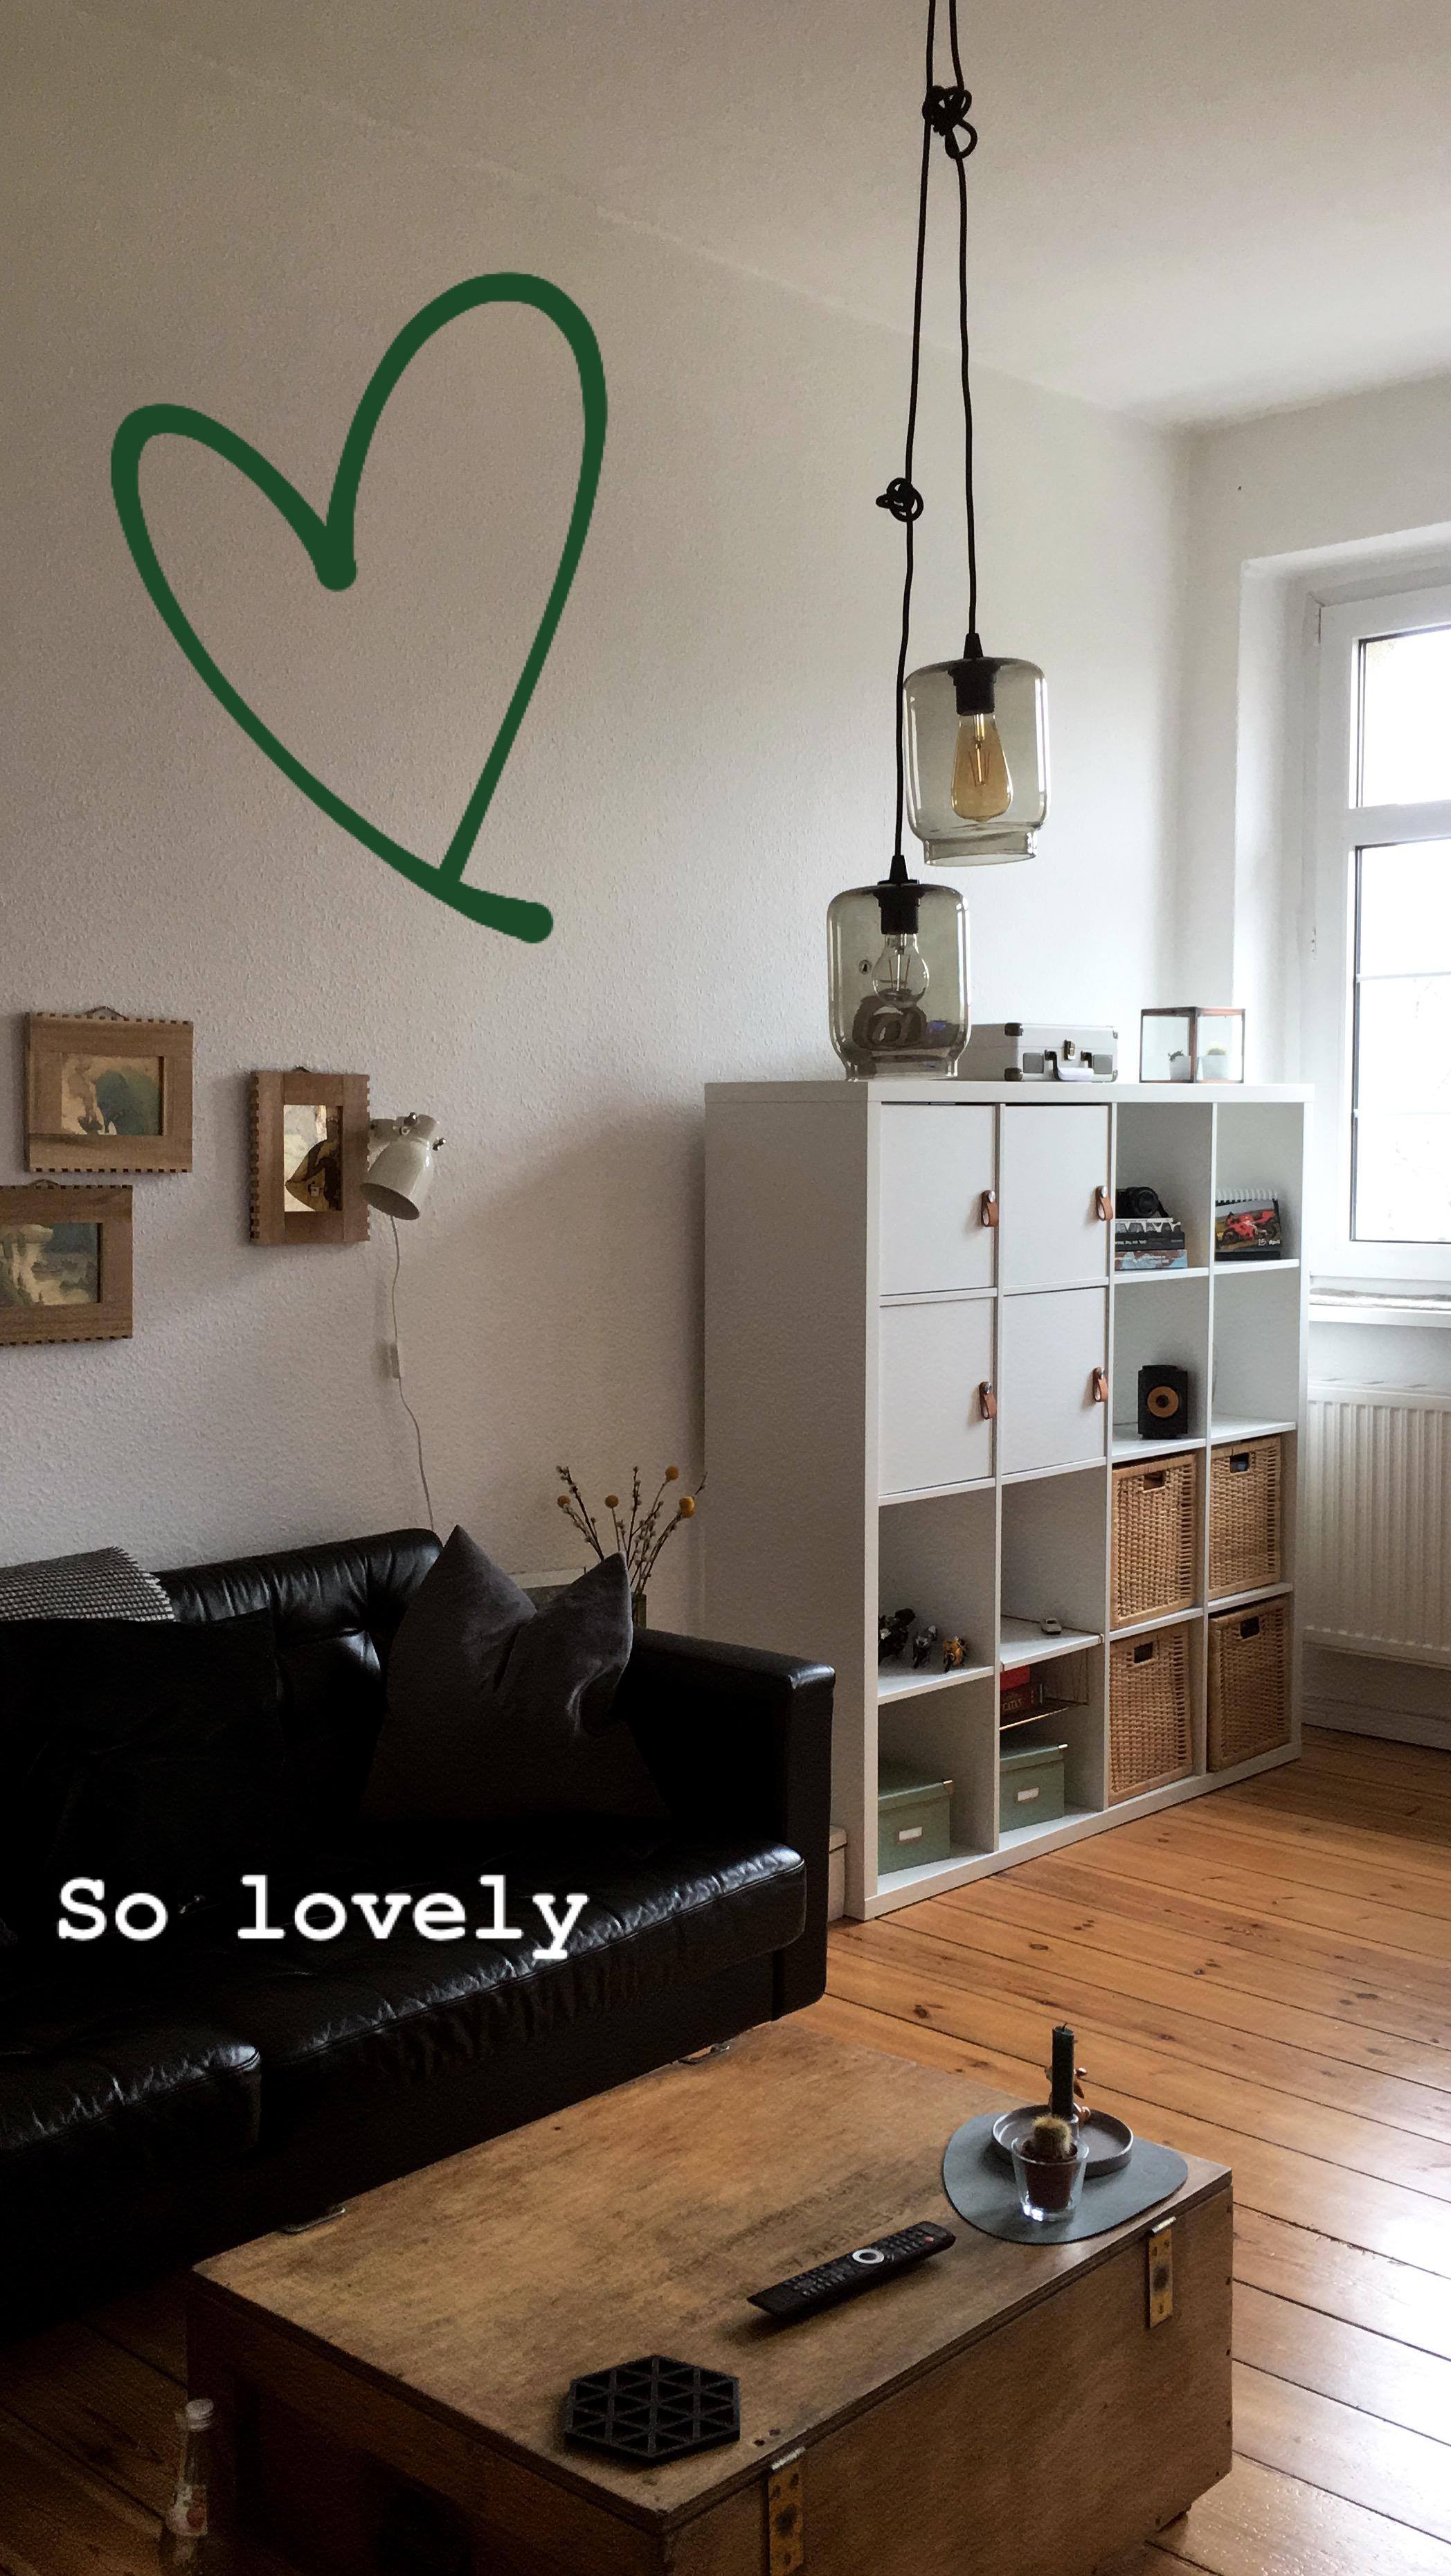 #livingroom #mykindofliving #bestappartment #soinlove #wood #leathersofa #kallax #selfmade #solovely